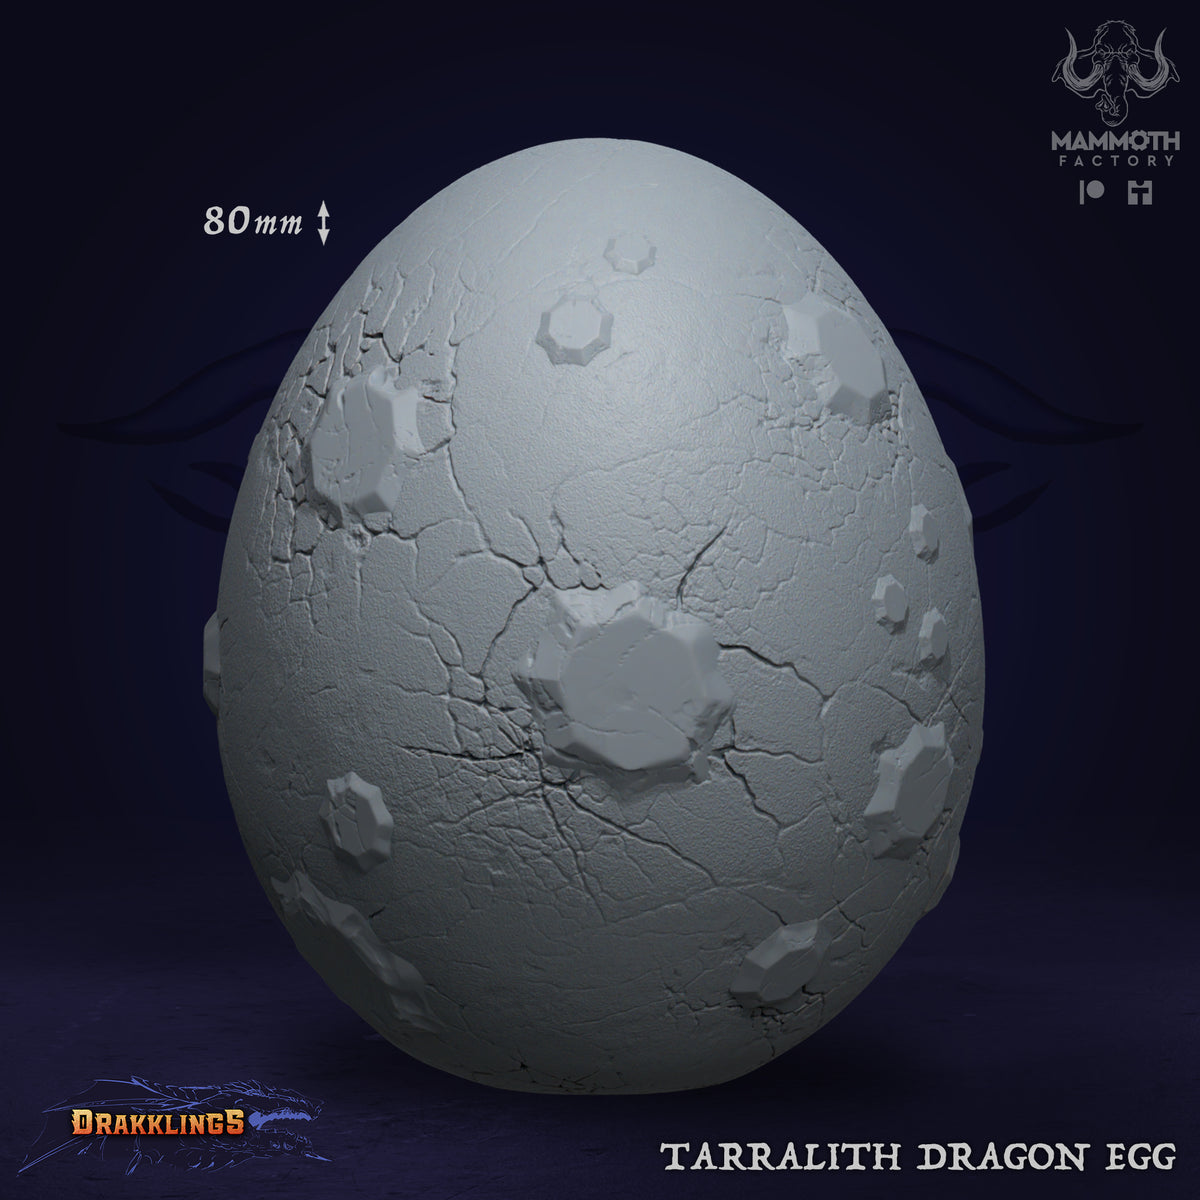 Tararlith Dragon Egg